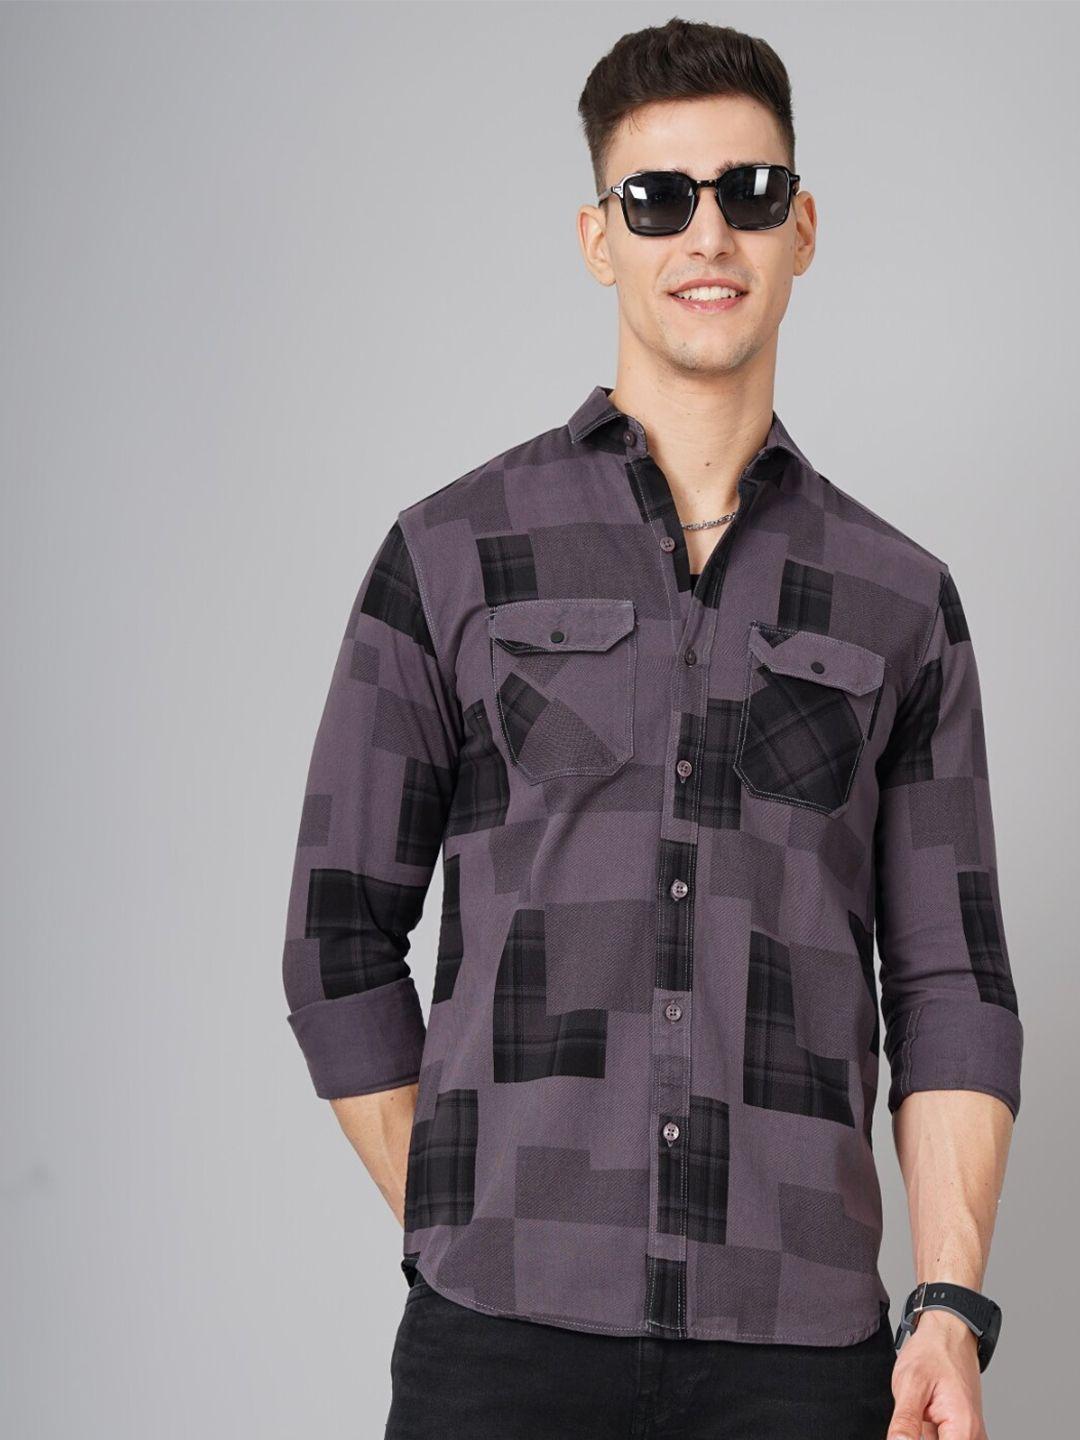 paul street standard slim fit geometric printed casual shirt